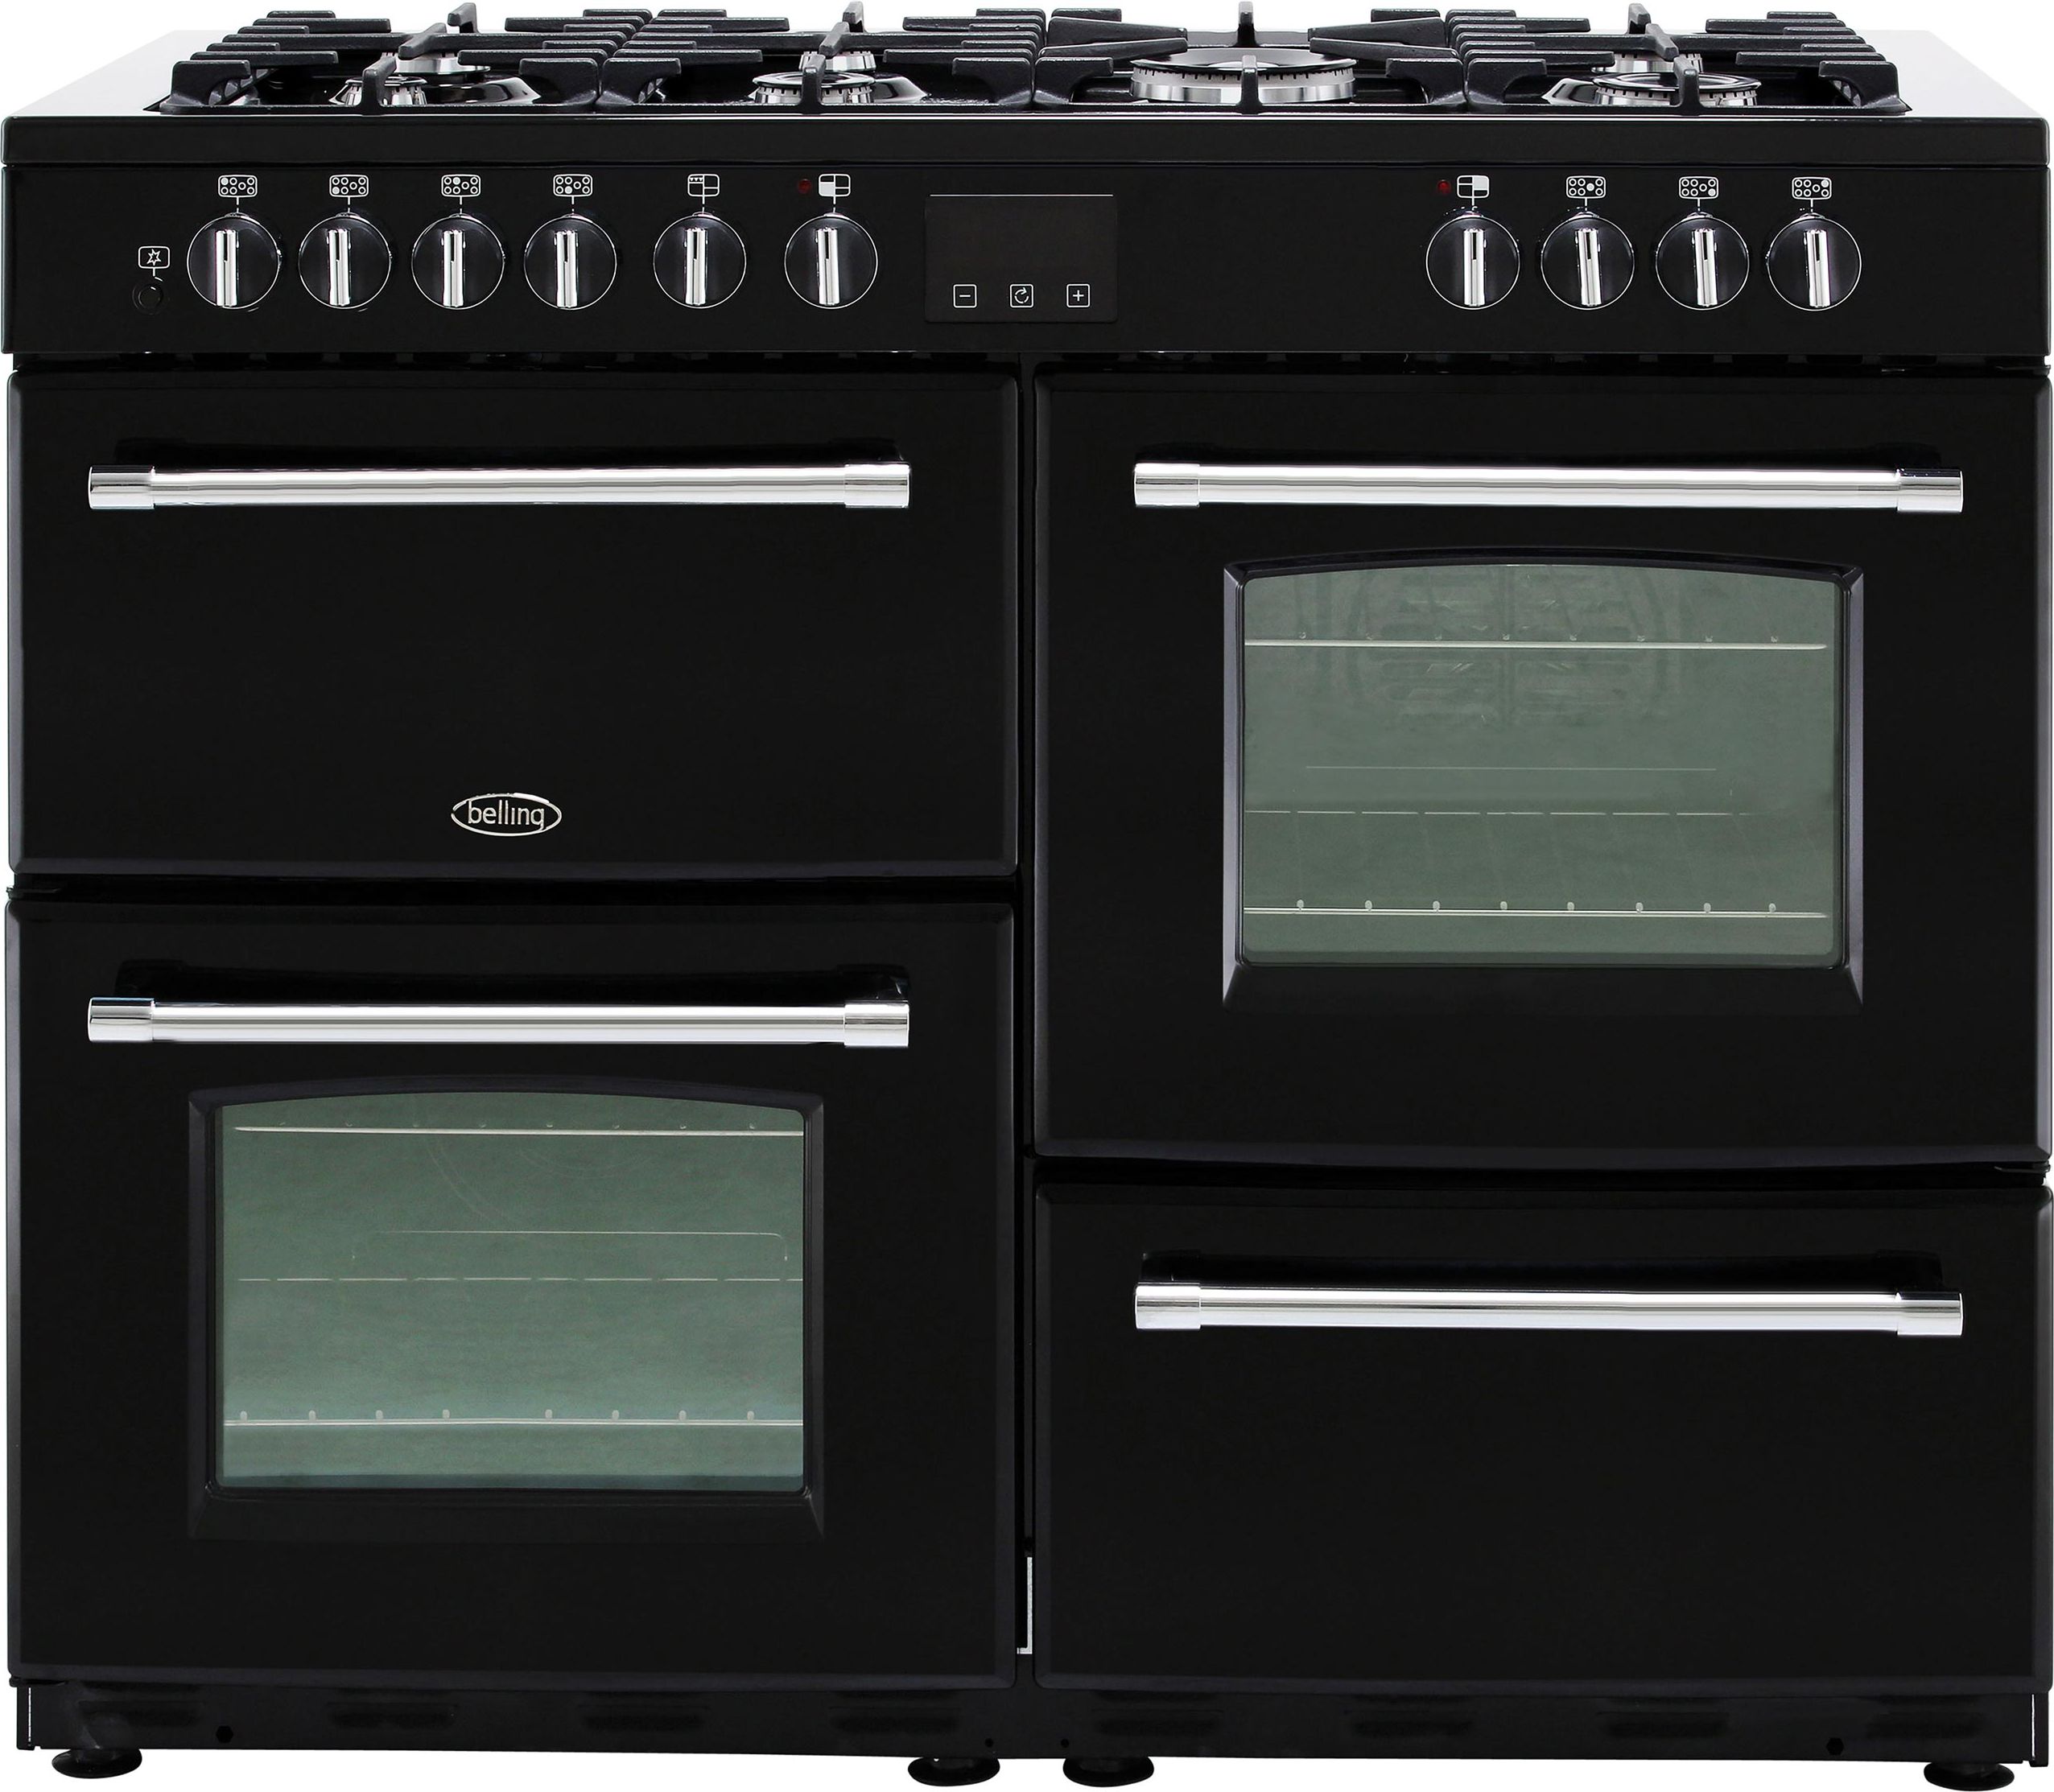 Belling Farmhouse110DF 110cm Dual Fuel Range Cooker - Black - A/A Rated, Black